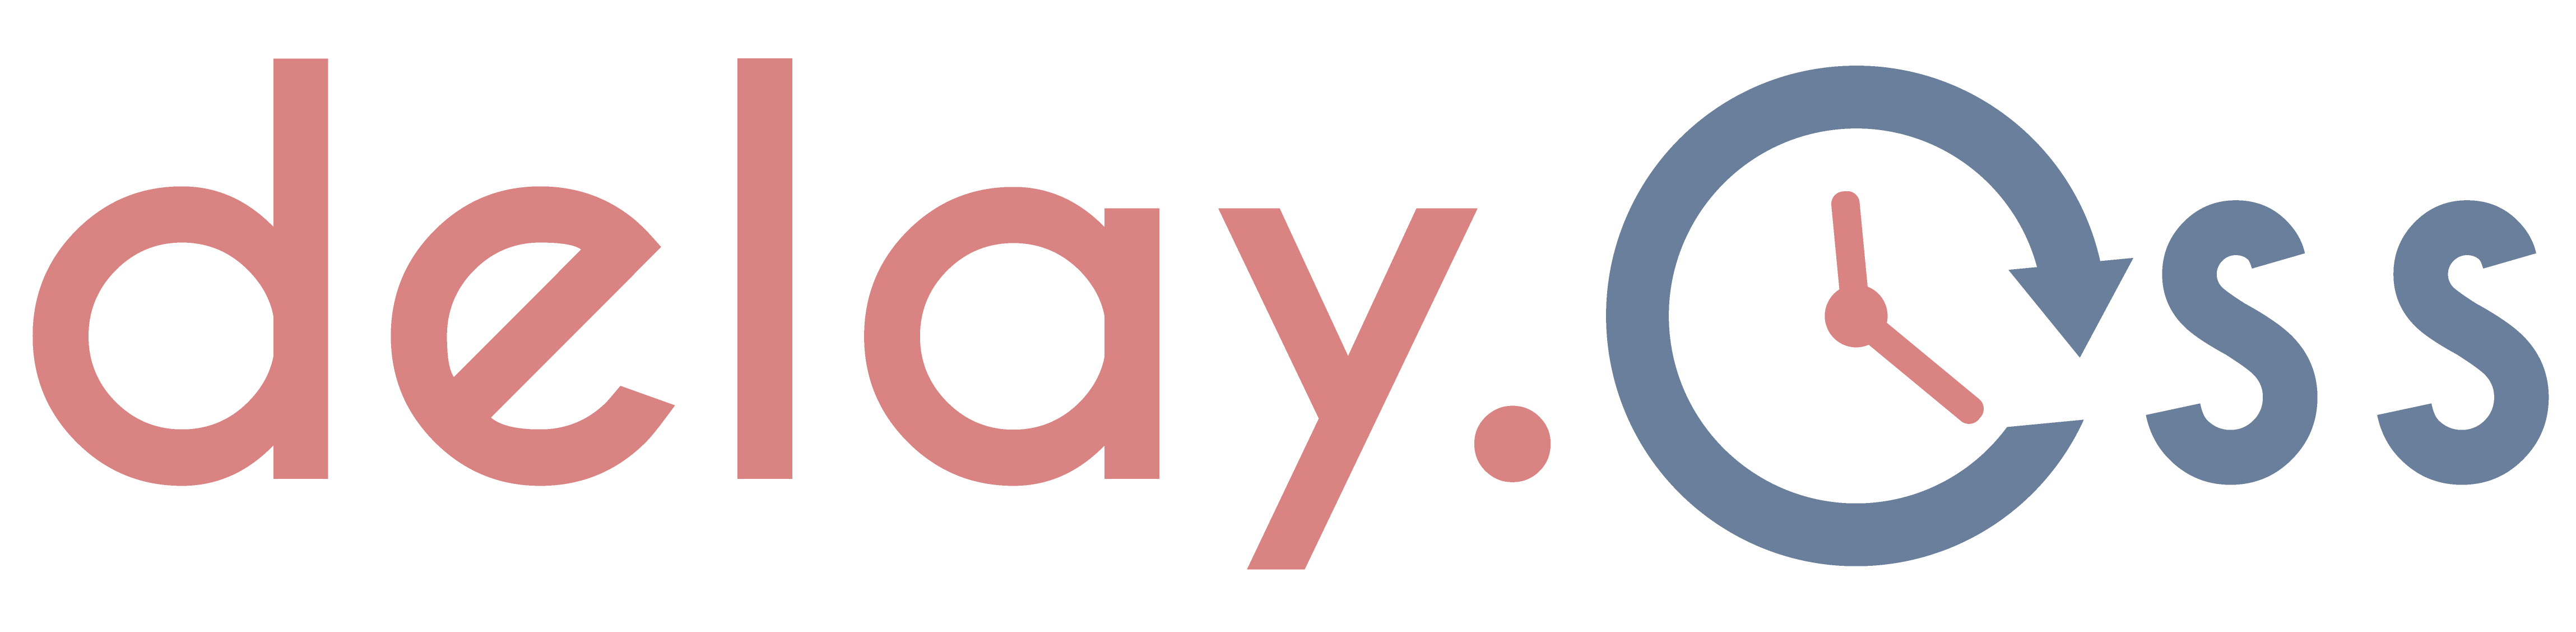 Delay.css logo